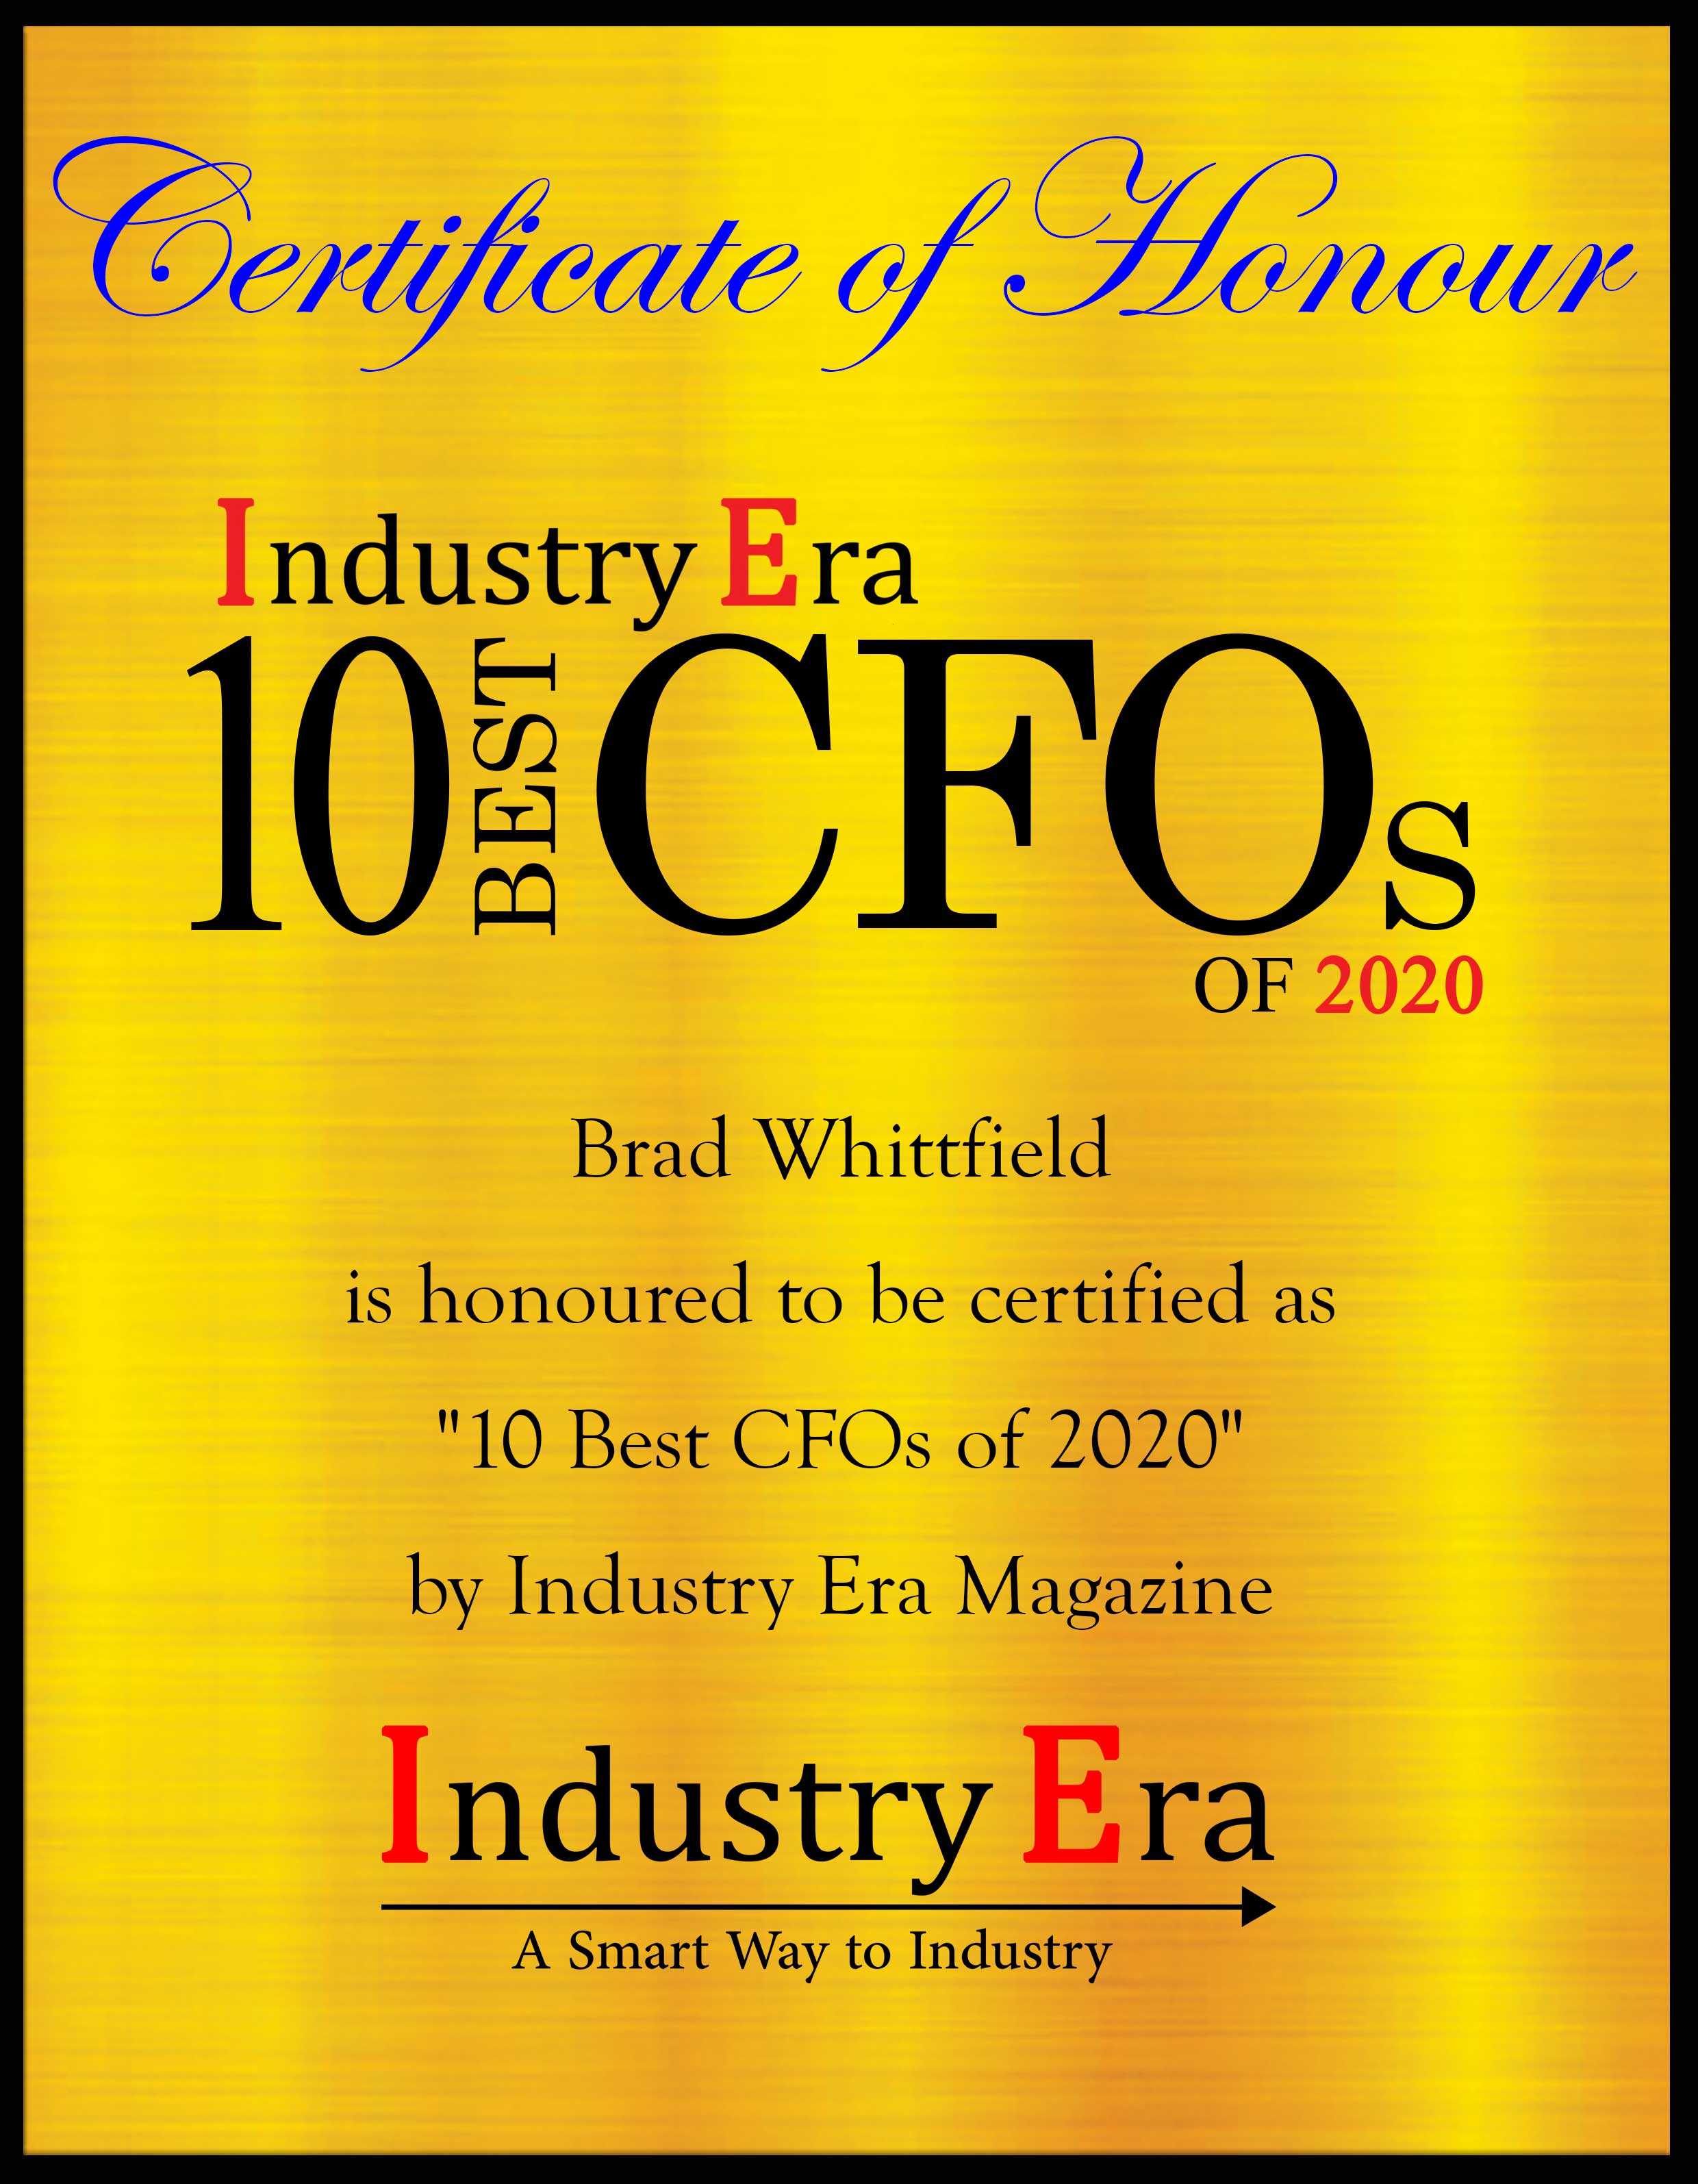 Brad Whittfield Group CFO Mondia Group Certificate